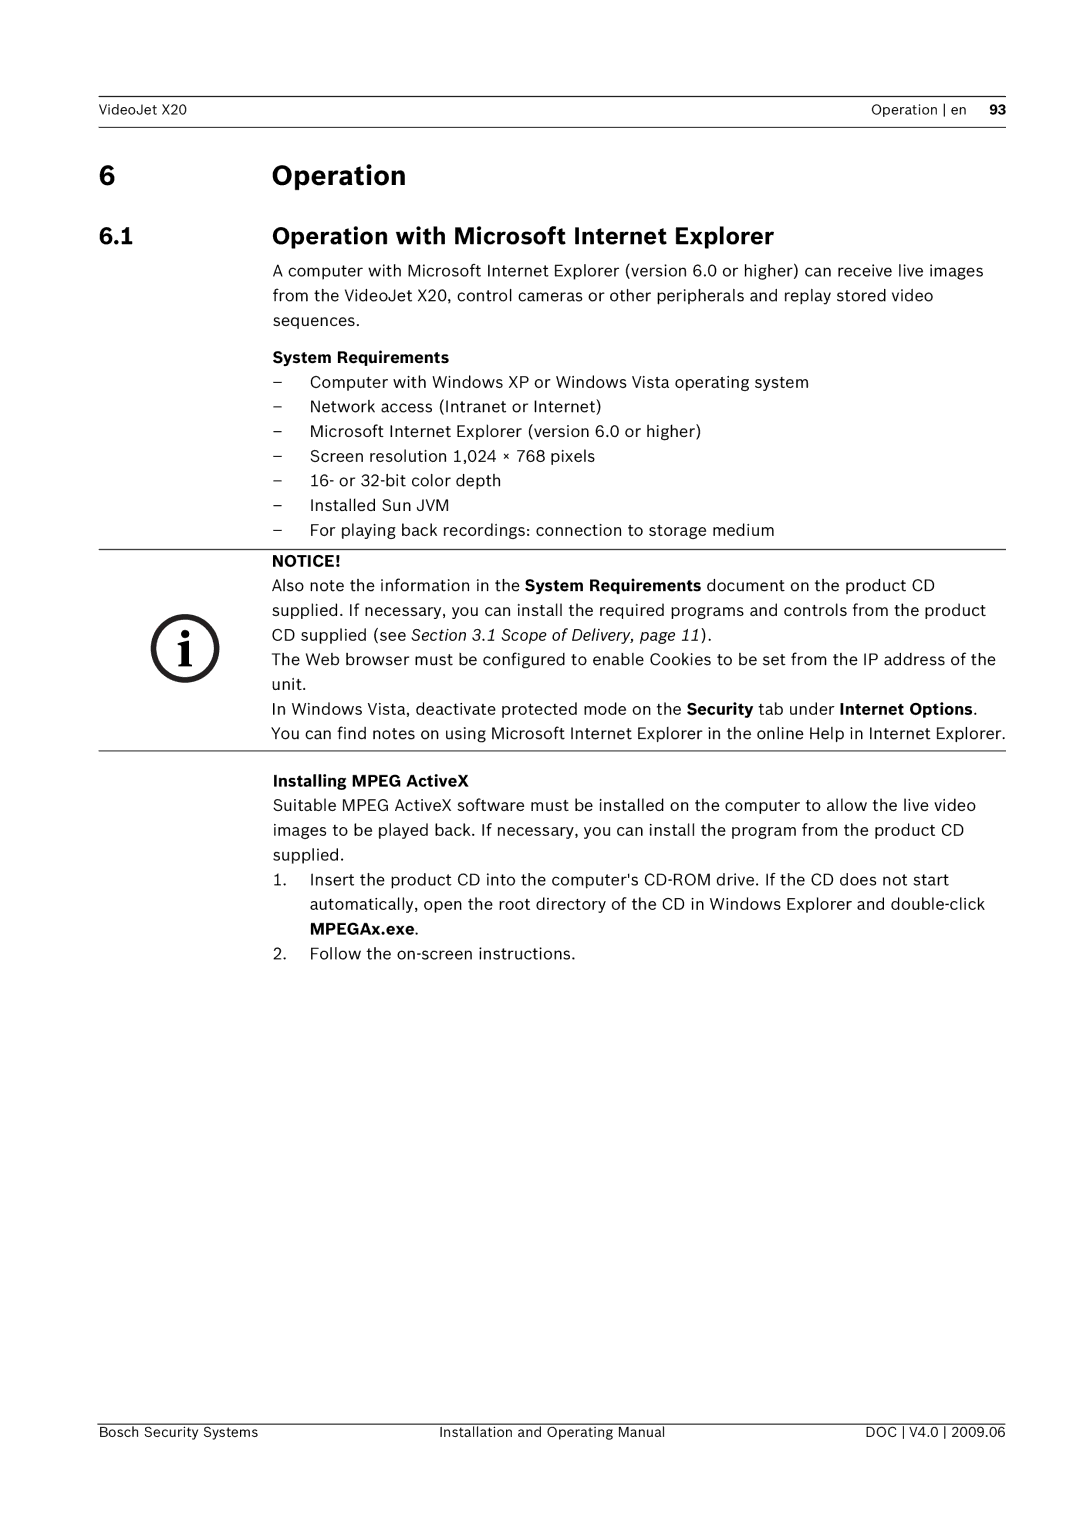 Bosch Appliances X20 manual Operation with Microsoft Internet Explorer 